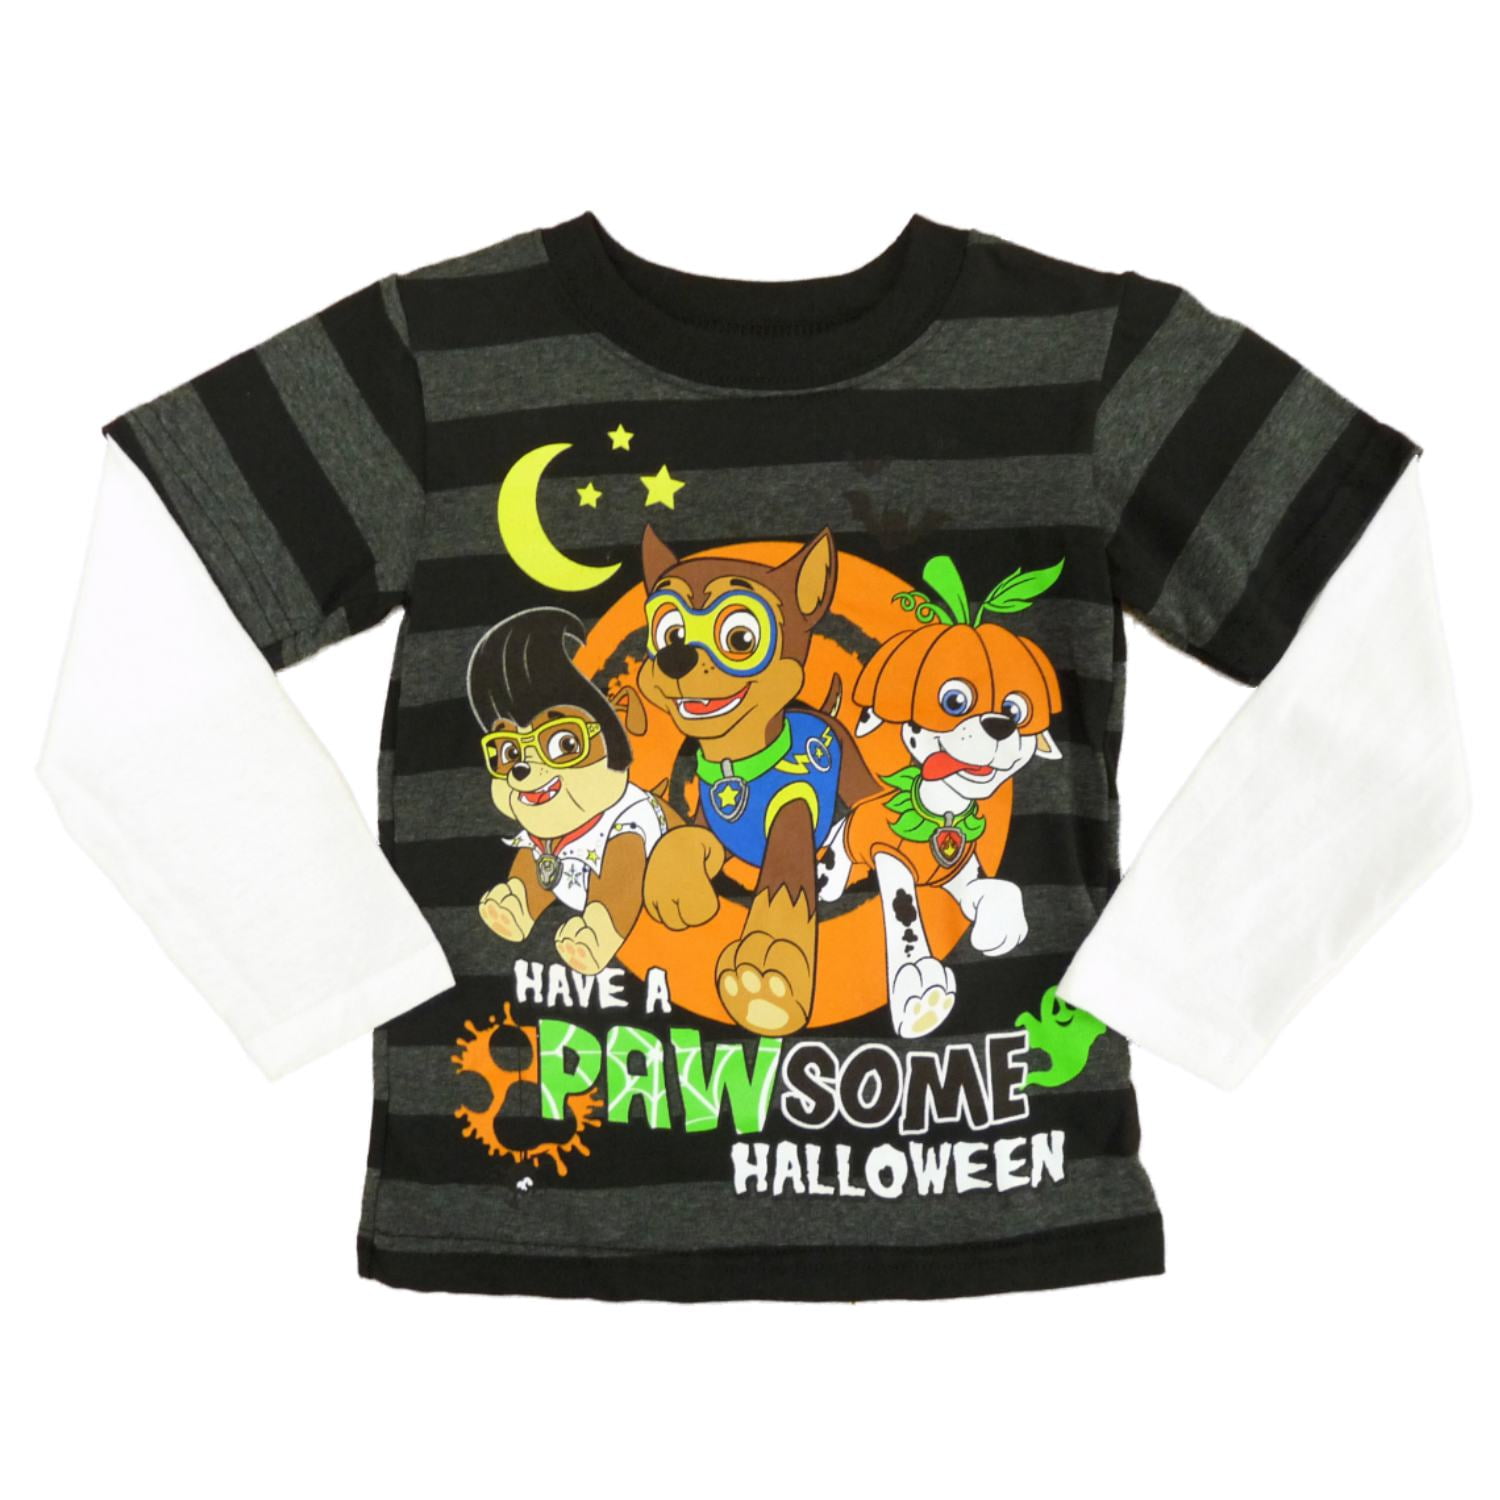 Nickelodeon Paw Patrol Halloween Toddler Boy Long Sleeve Shirt Top New 4T 